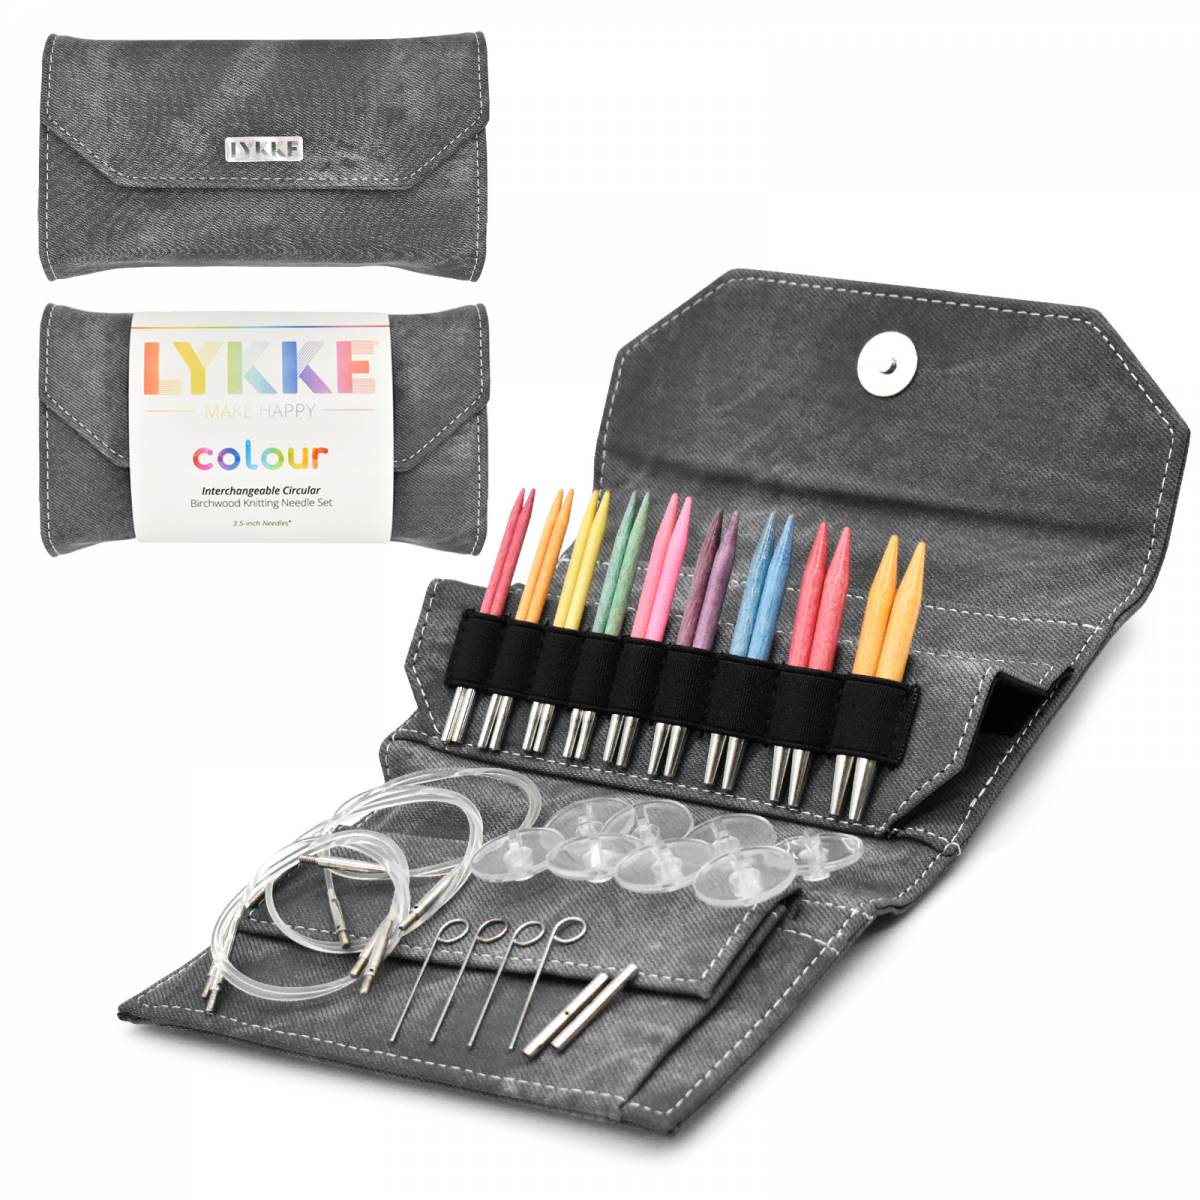 Lykke Colour Interchangeable Knitting Needle Set